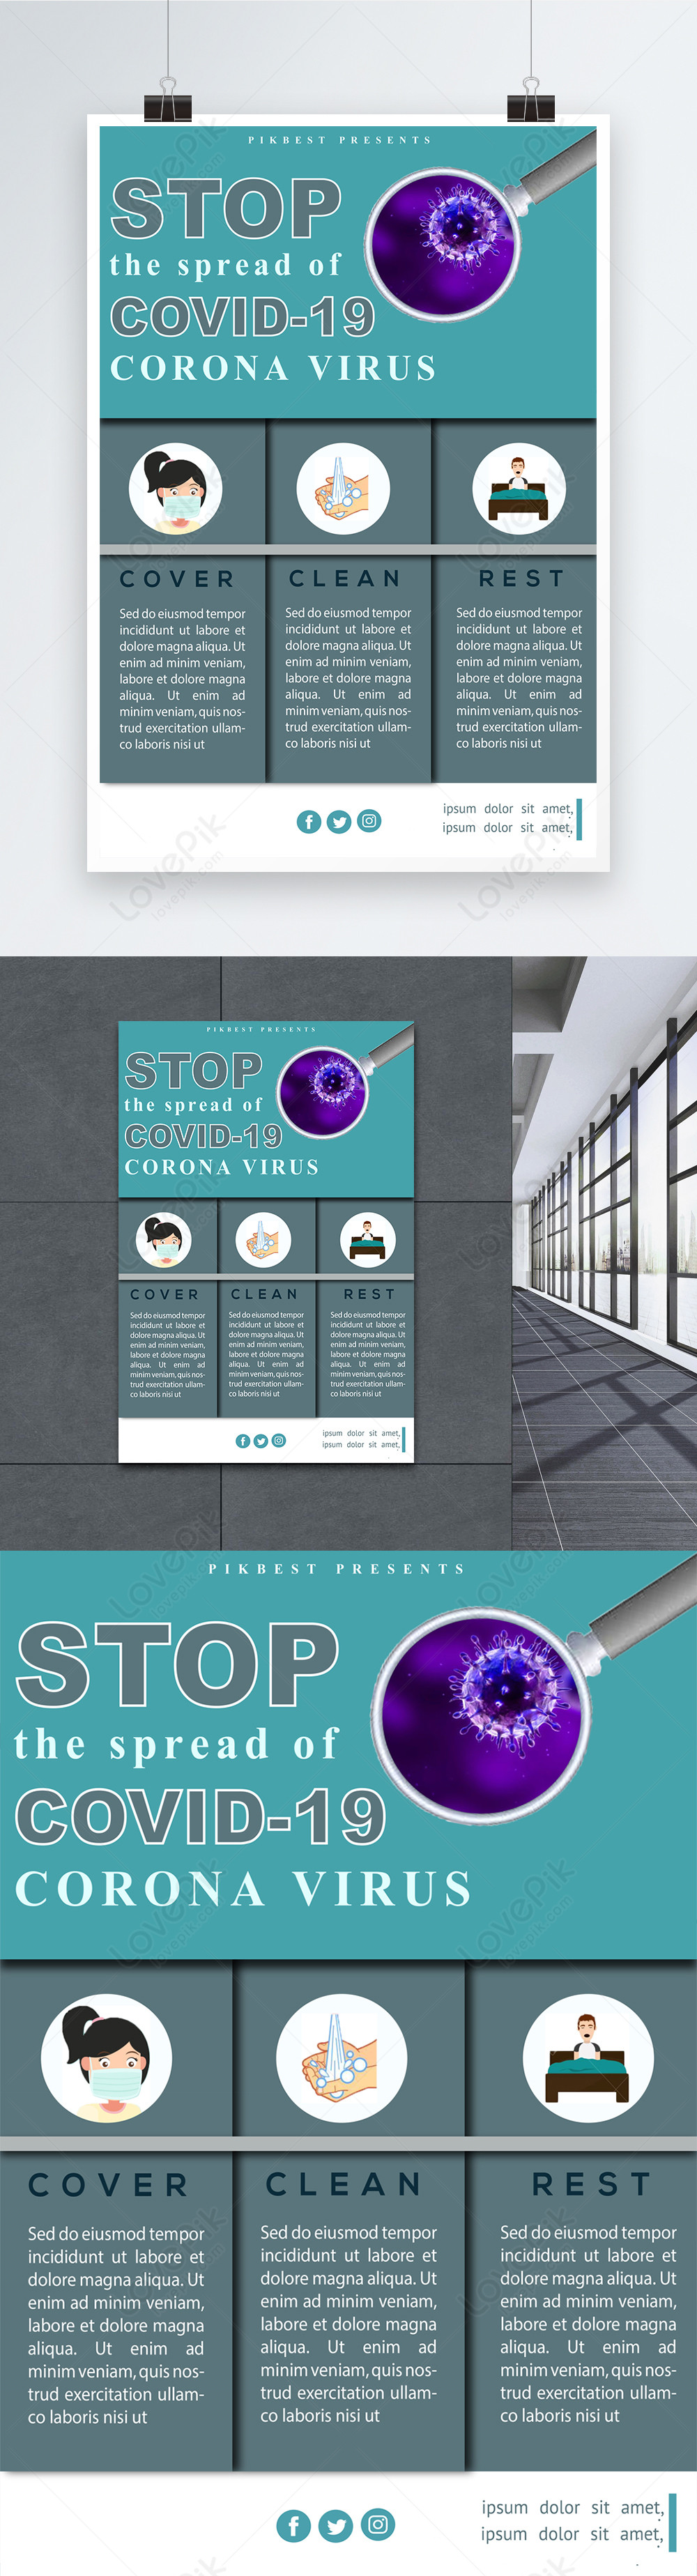 Stop covid-19 coronavirus poster template image_picture free download 450004107_lovepik.com